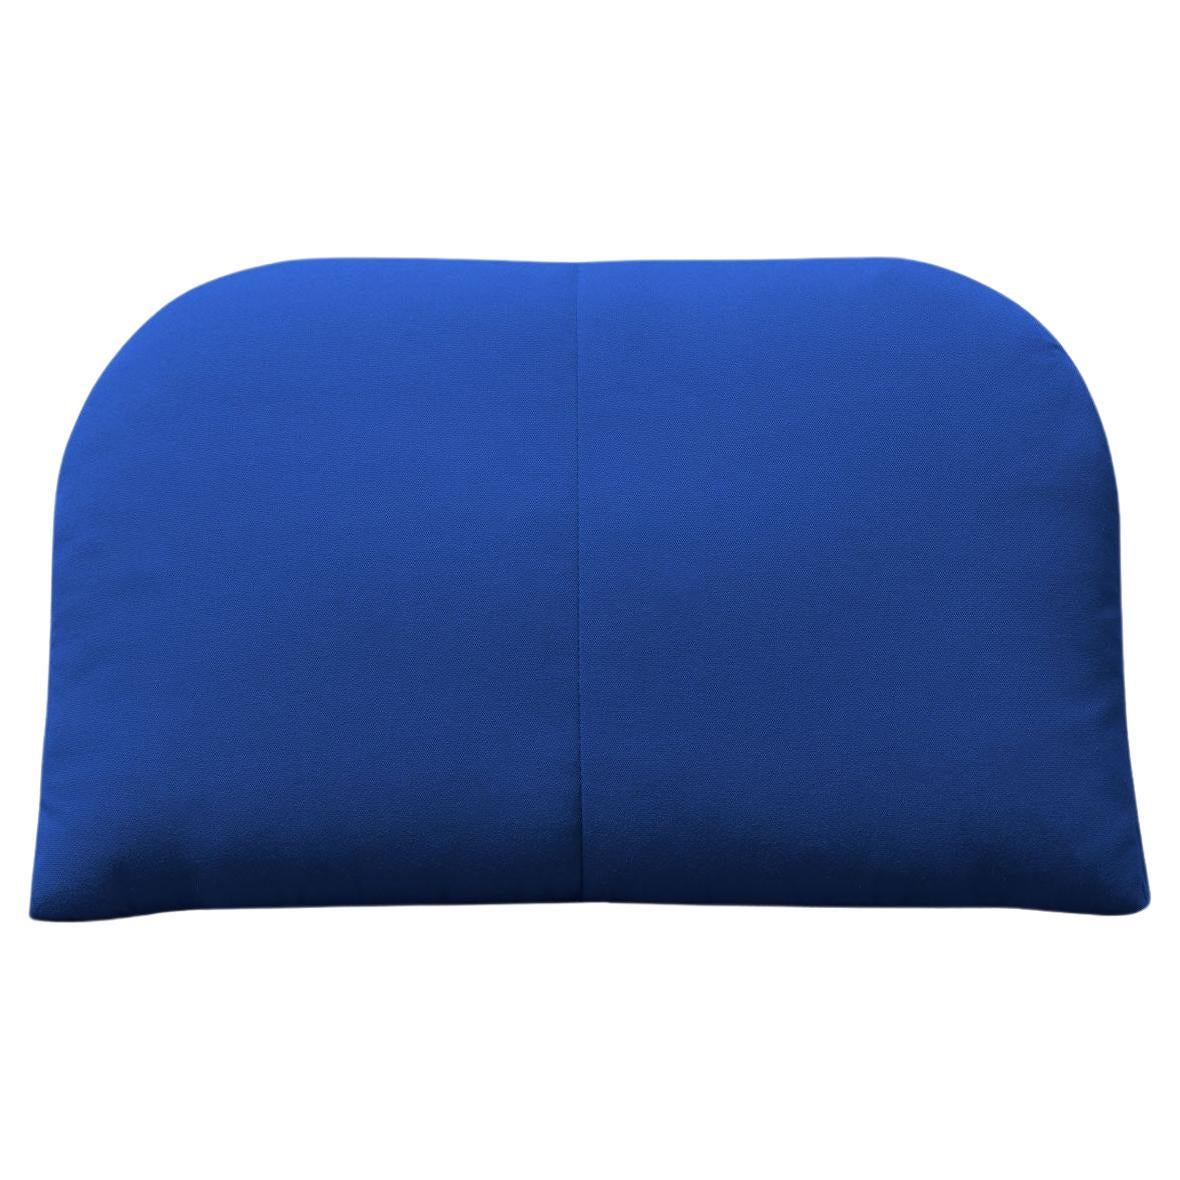 Bend Goods - Arc Throw Pillow in True Blue Sunbrella For Sale